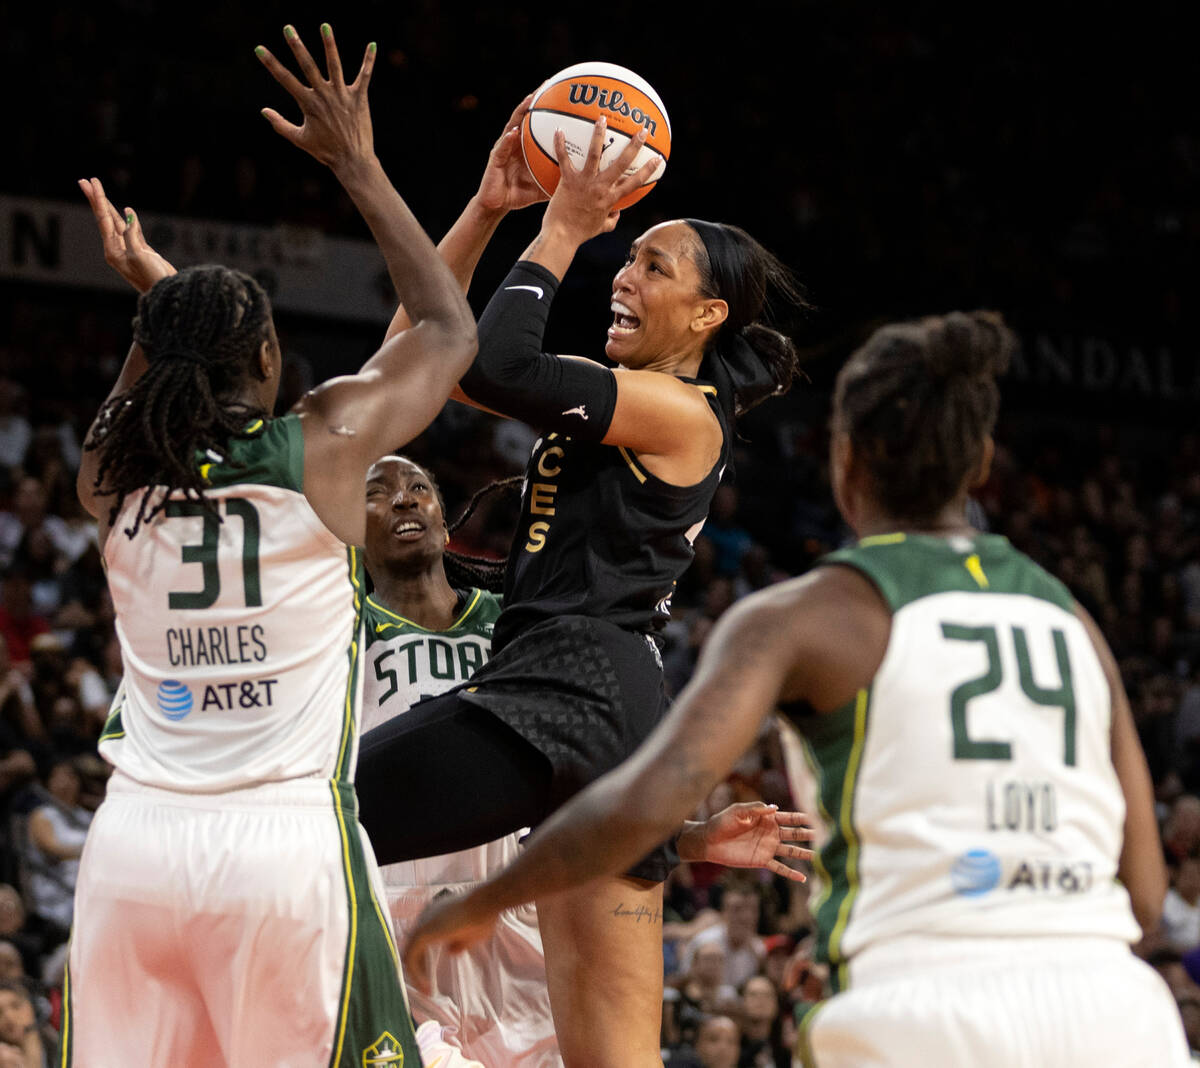 WNBA SUPERSTAR A'JA WILSON ROCKS VGK JERSEY 🏀 — VGK Lifestyle